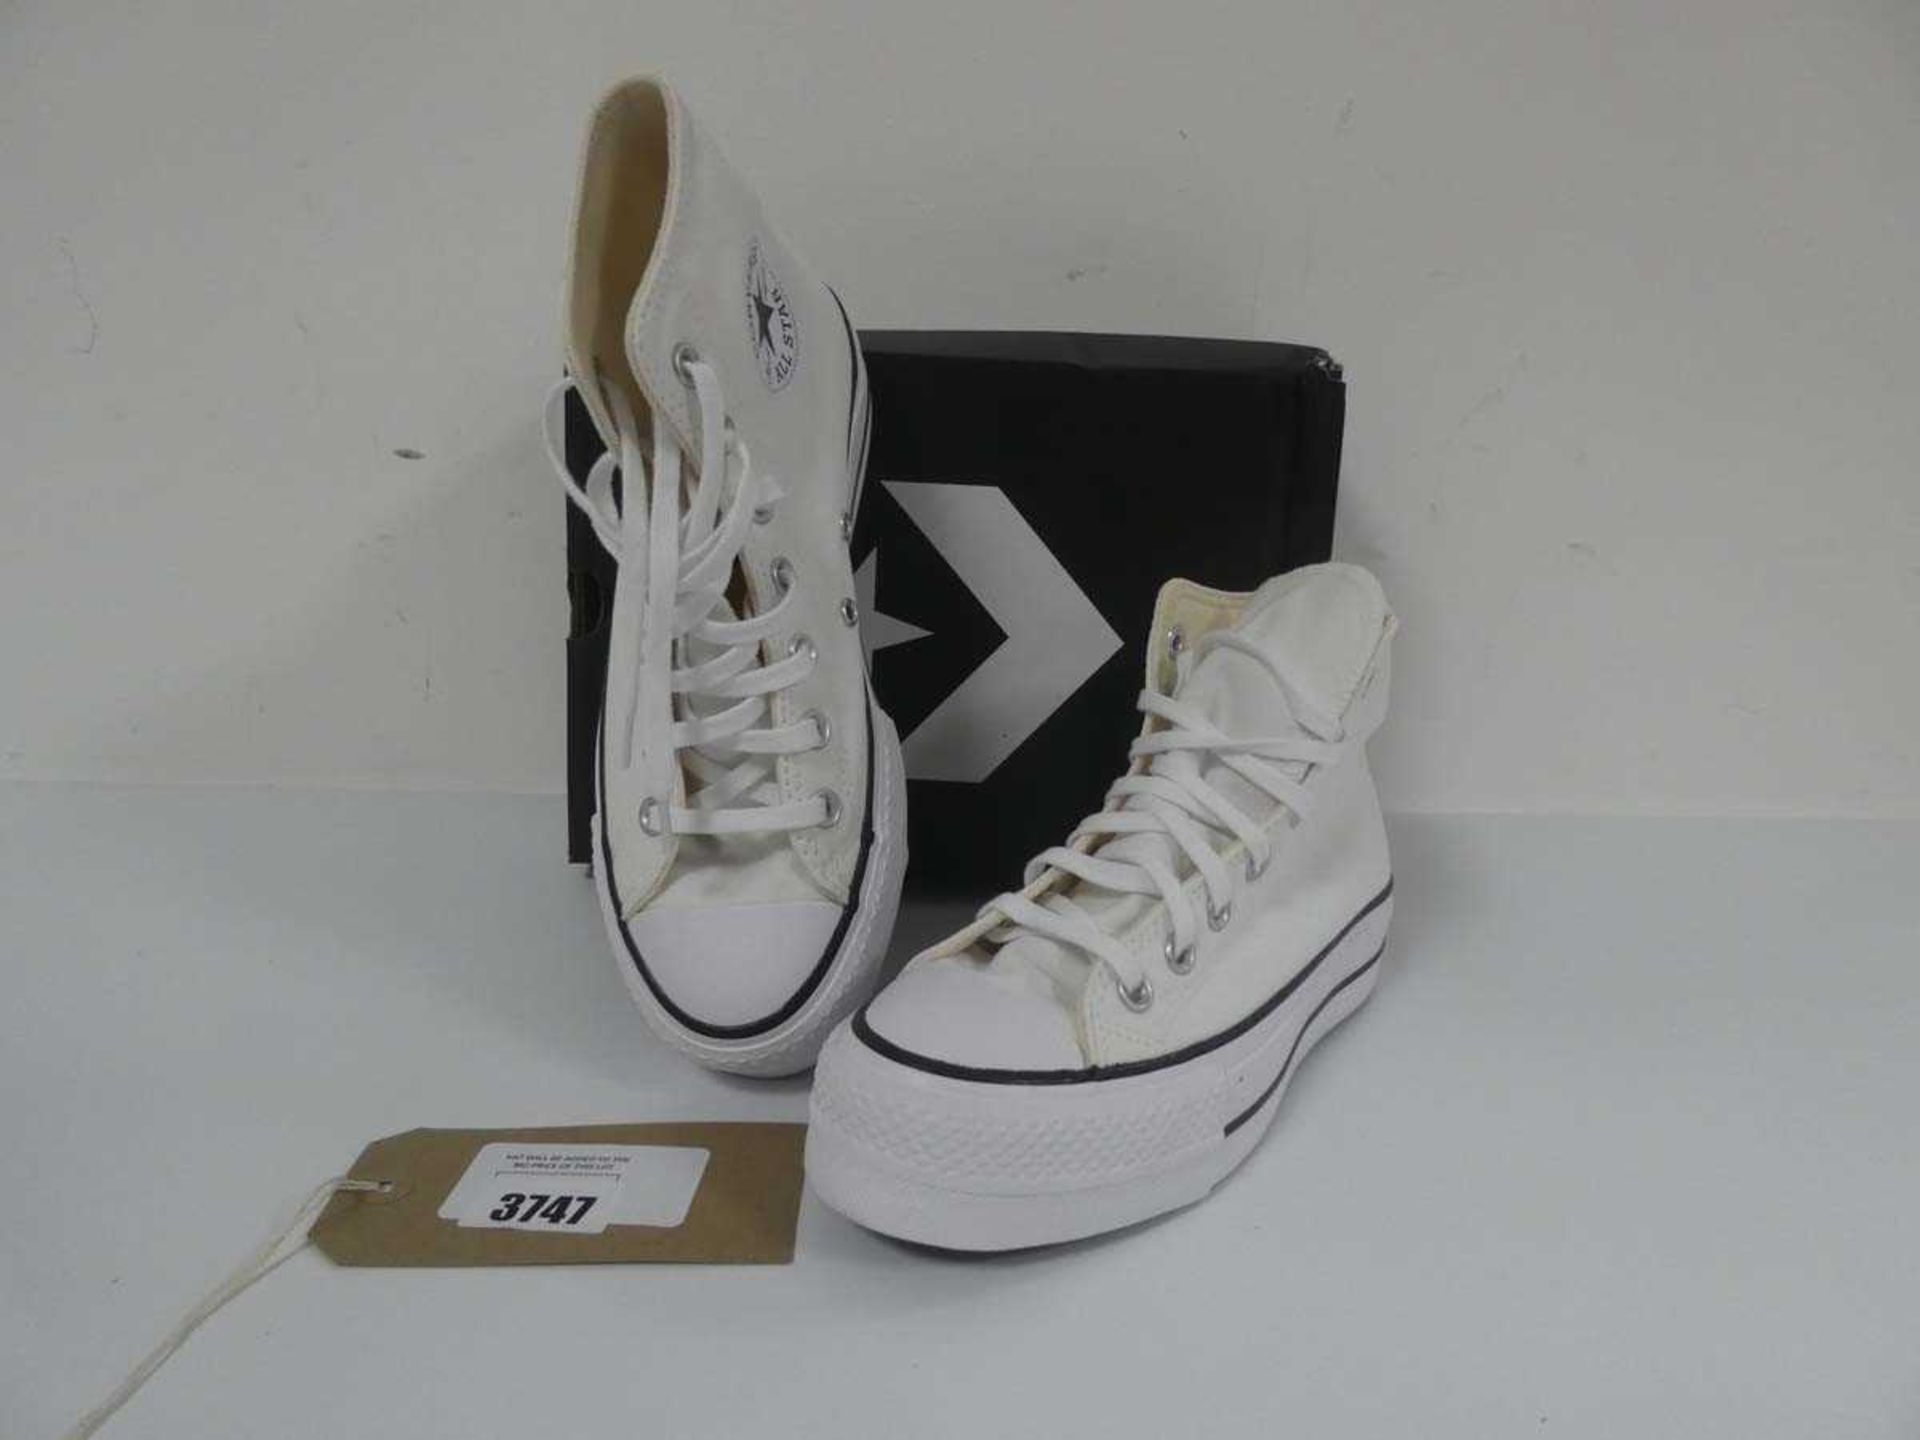 +VAT Boxed pair of Converse lift hi chunky platform shoes in white / black size UK4.5